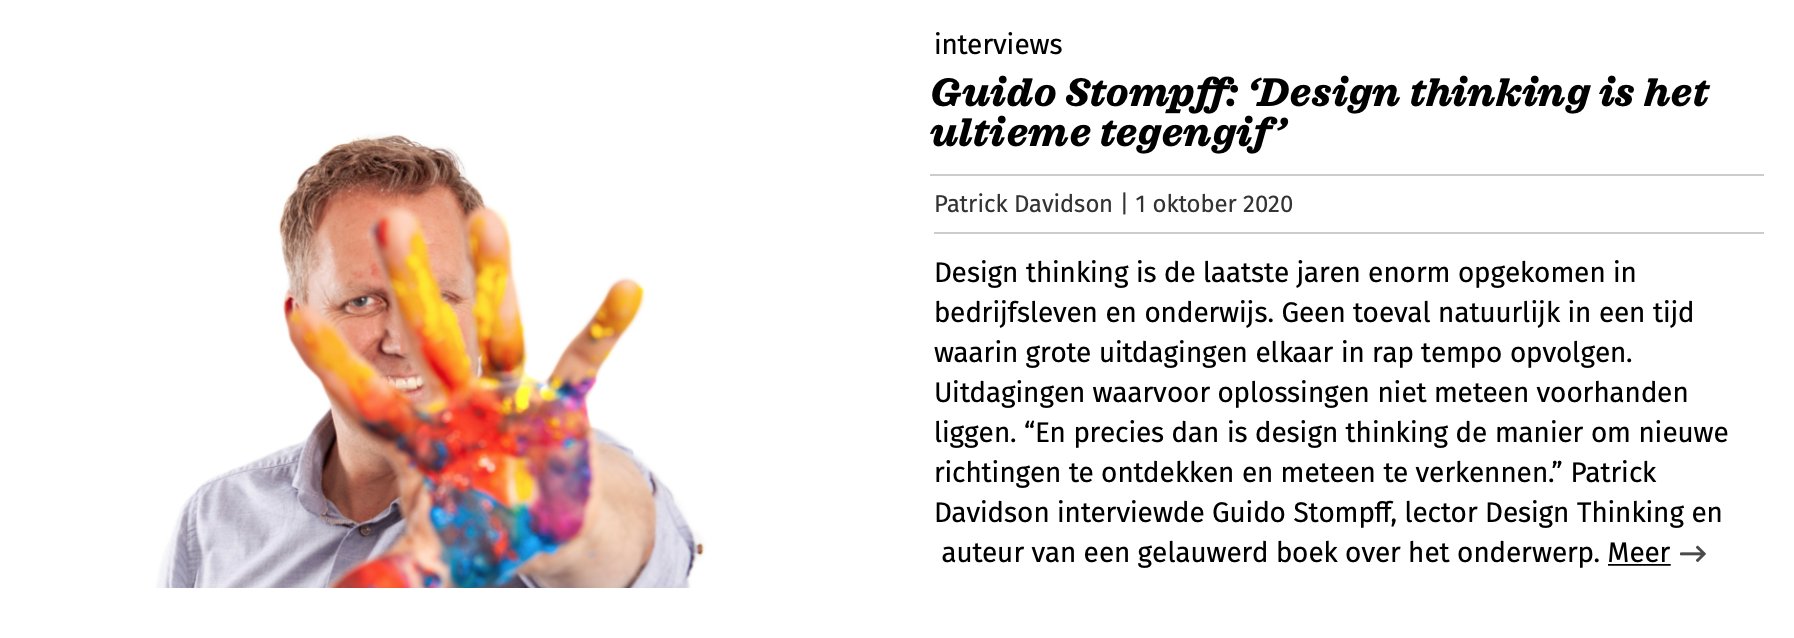 Design Thinking - Guido Stompff interview met Patrick Davidson